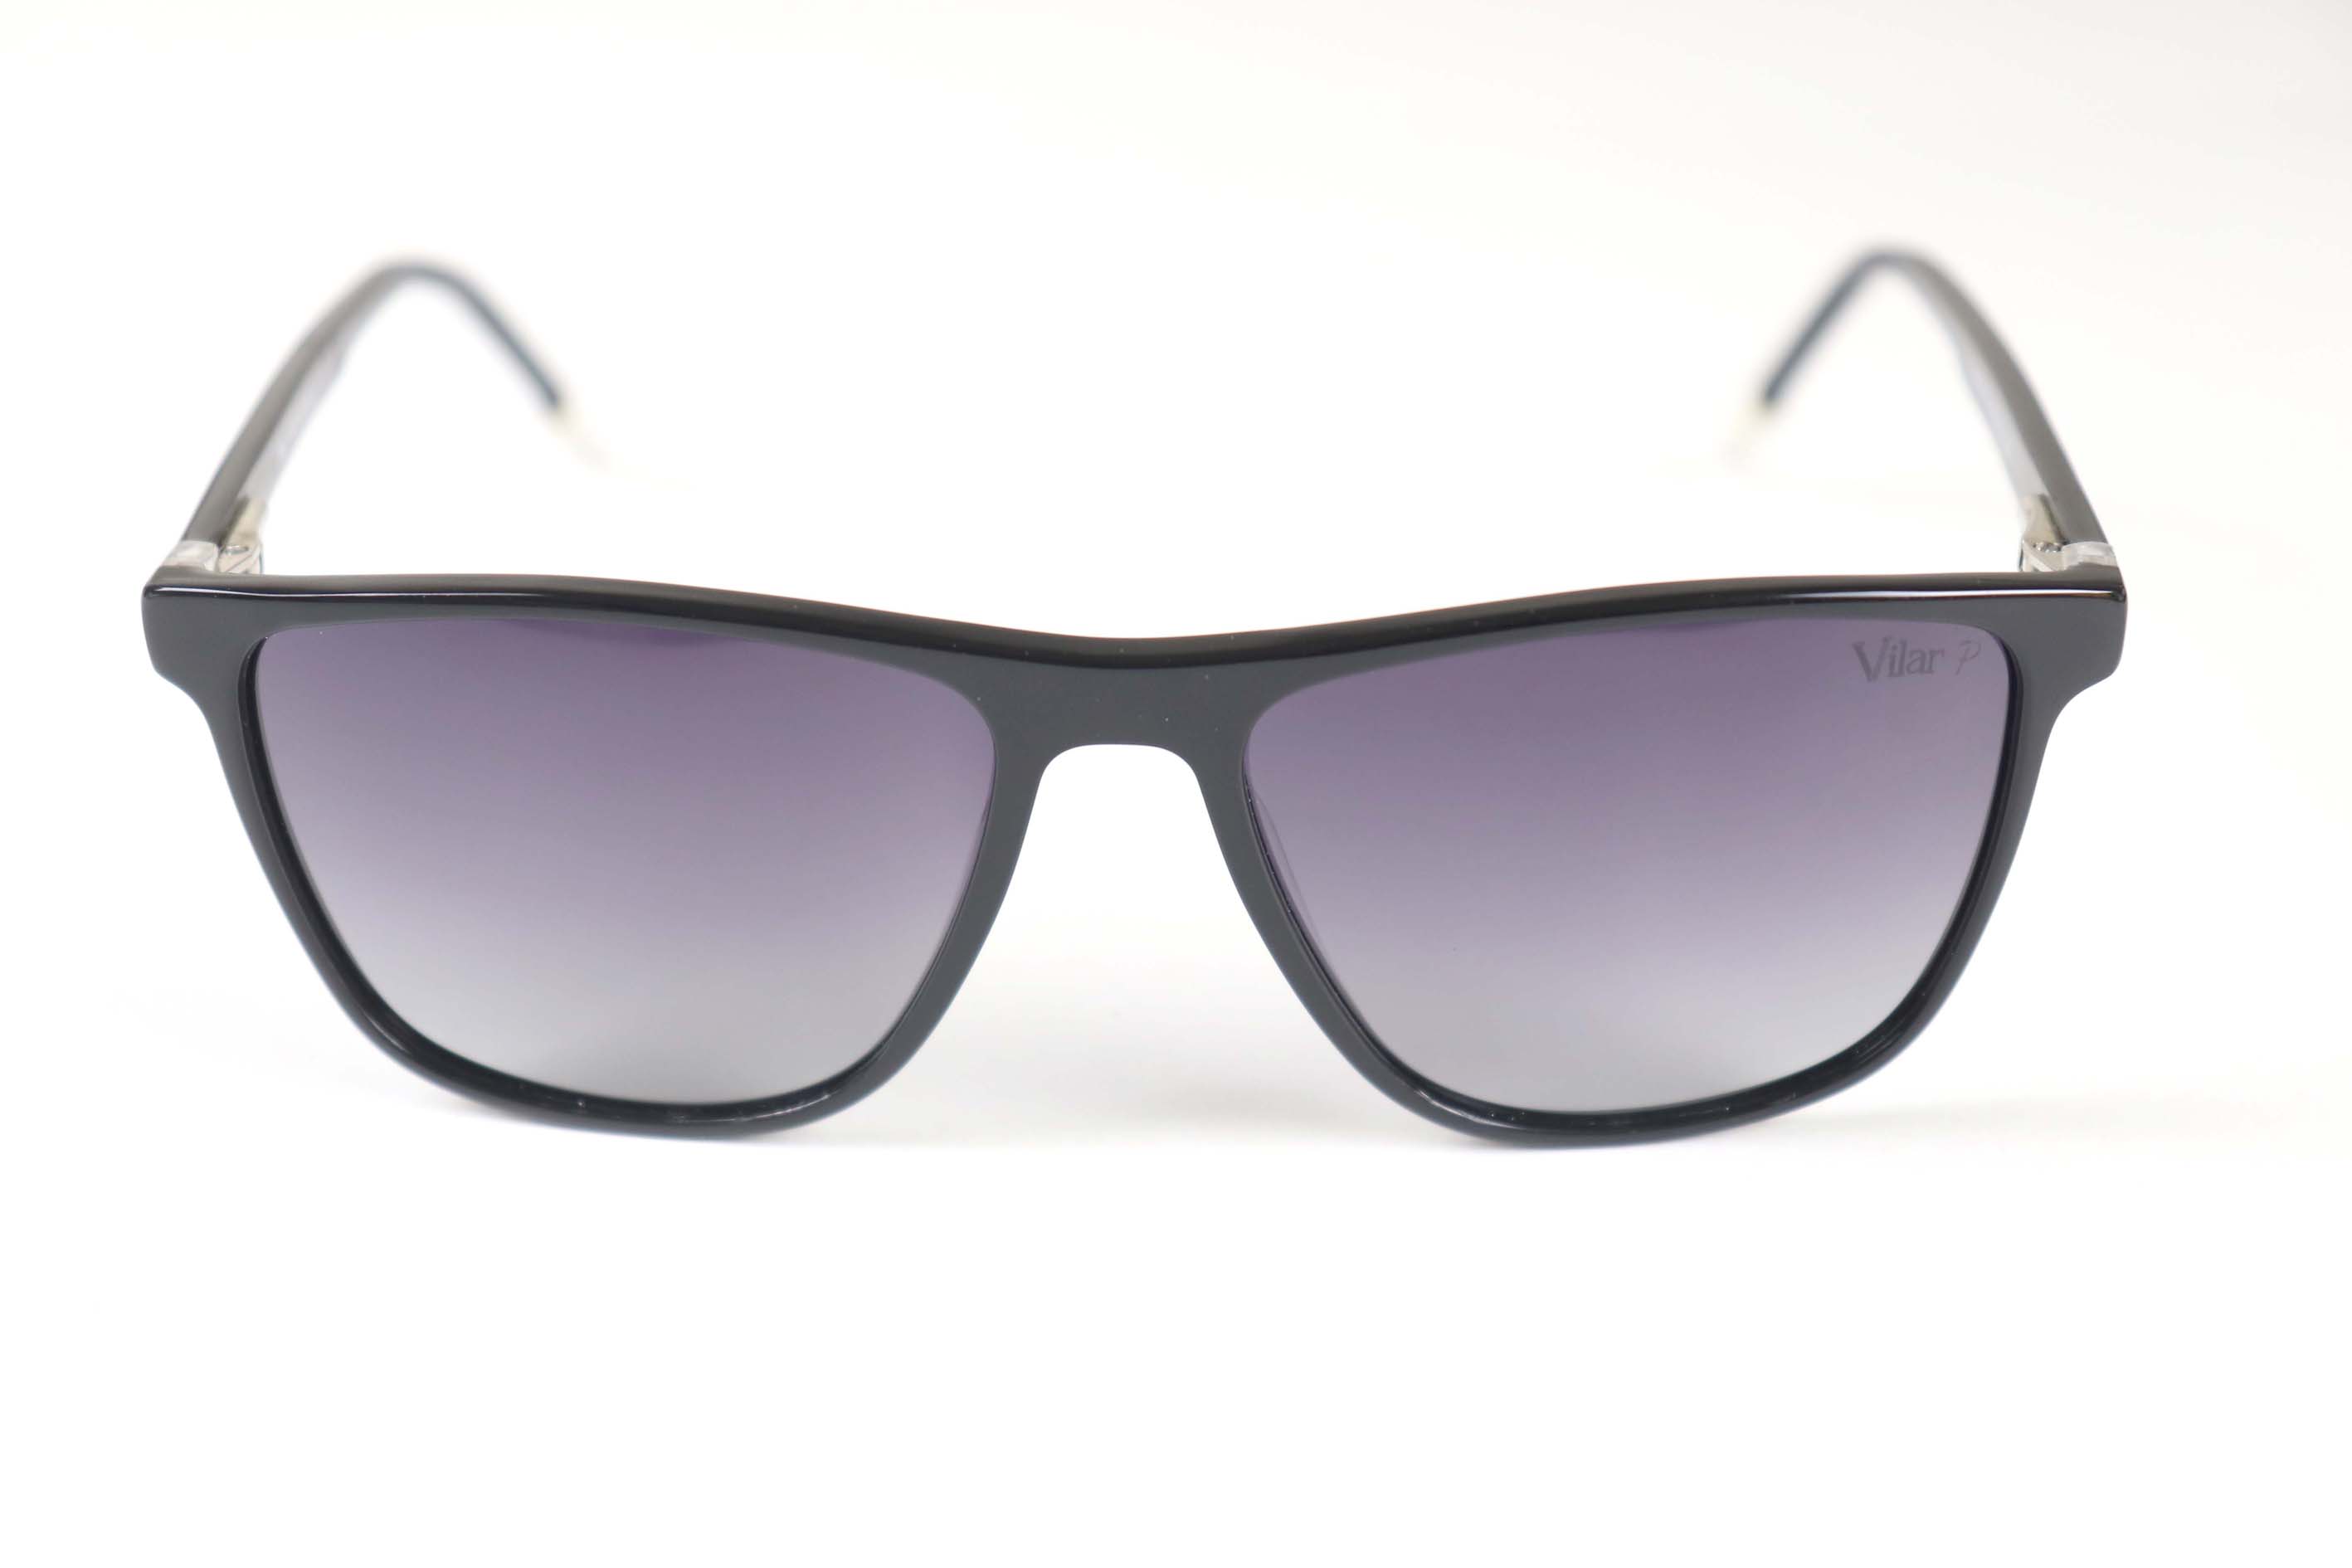 Vilar Sunglasses-OR-coo2-s-19407